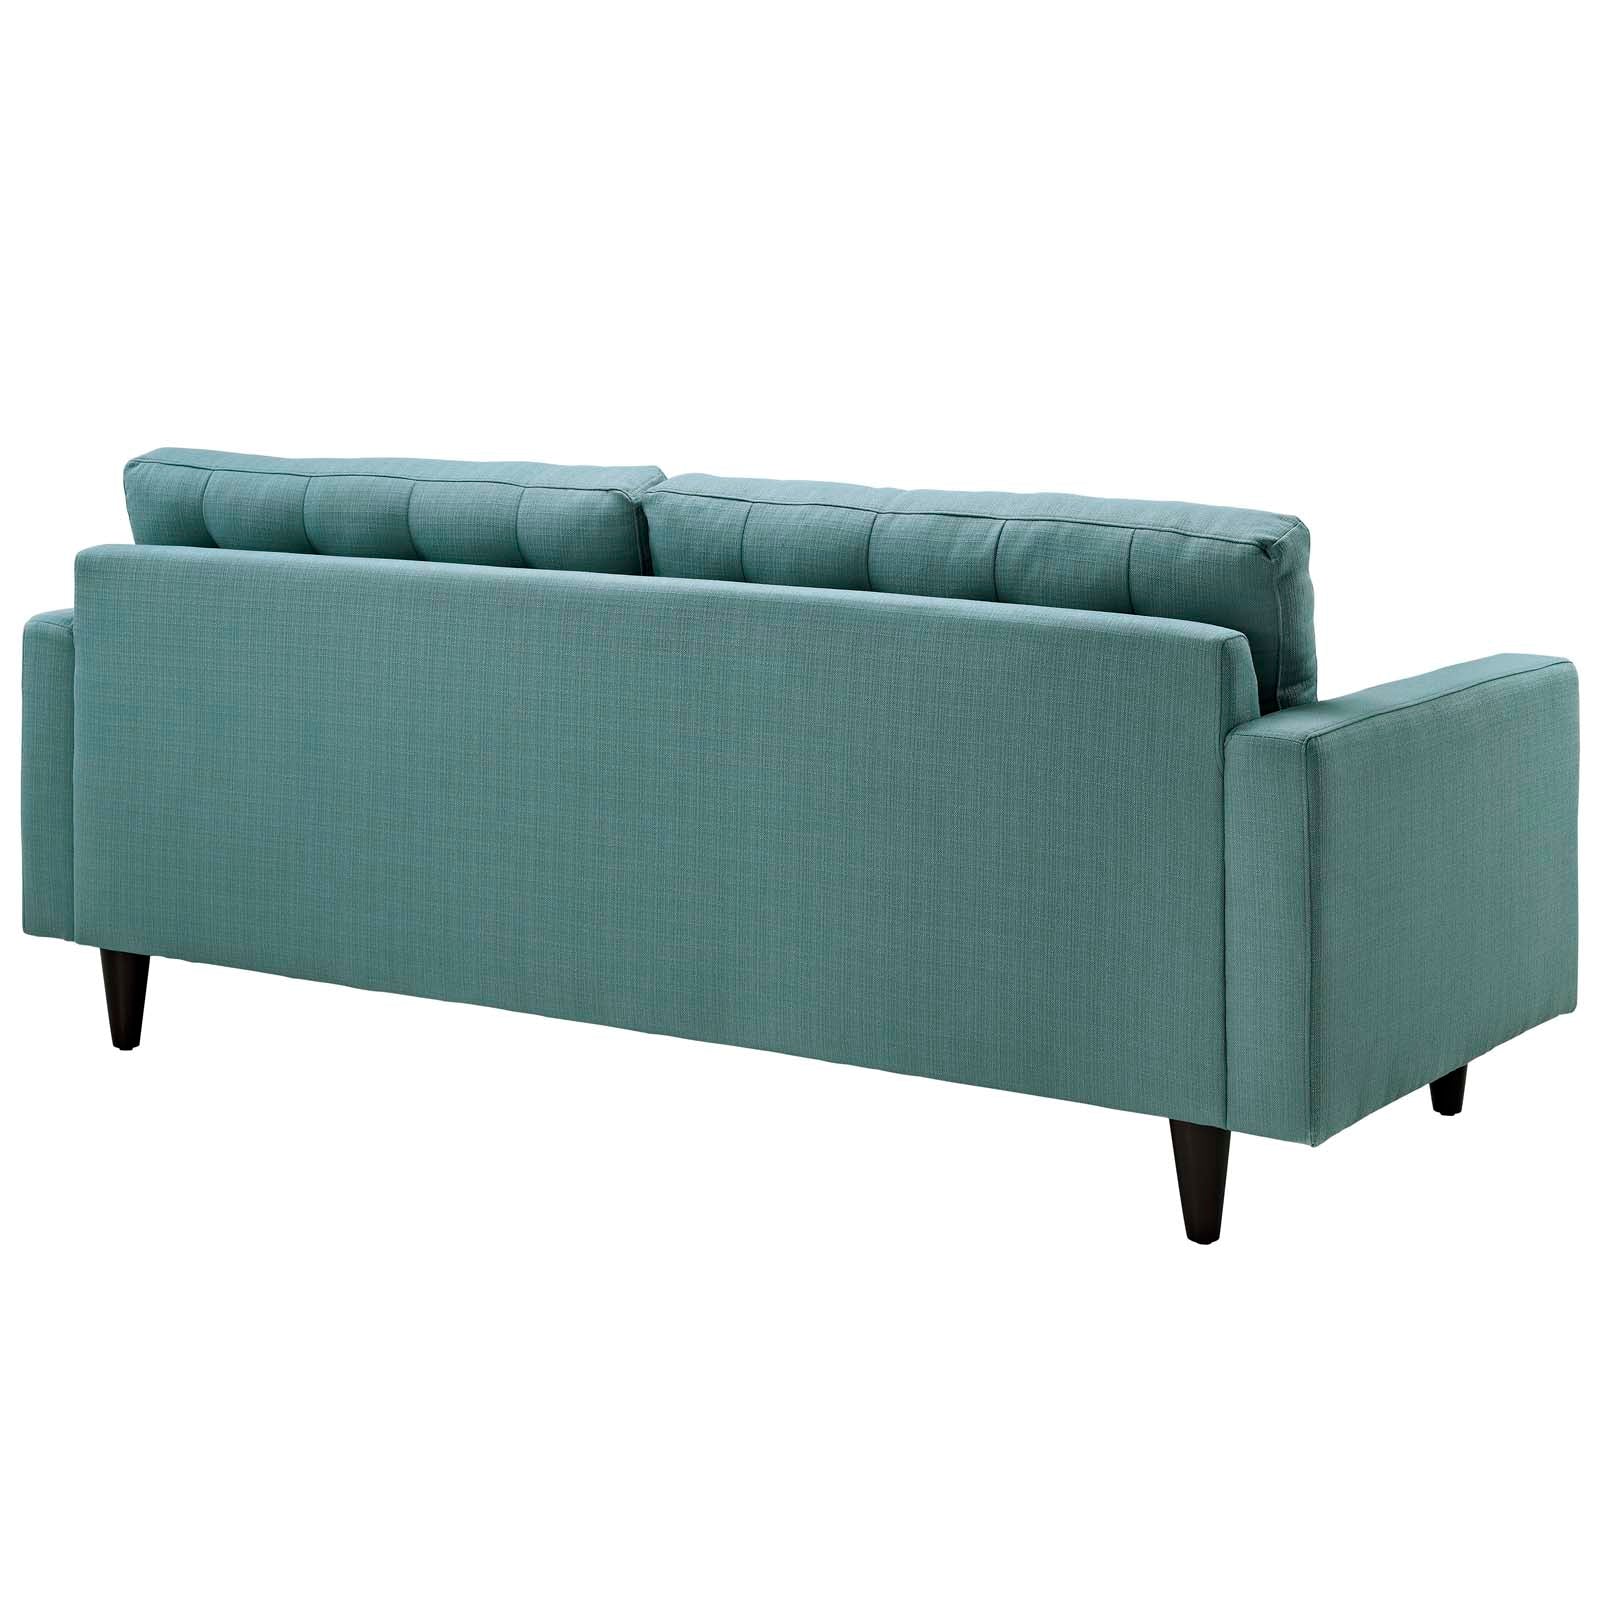 Empress Upholstered Fabric Sofa - East Shore Modern Home Furnishings